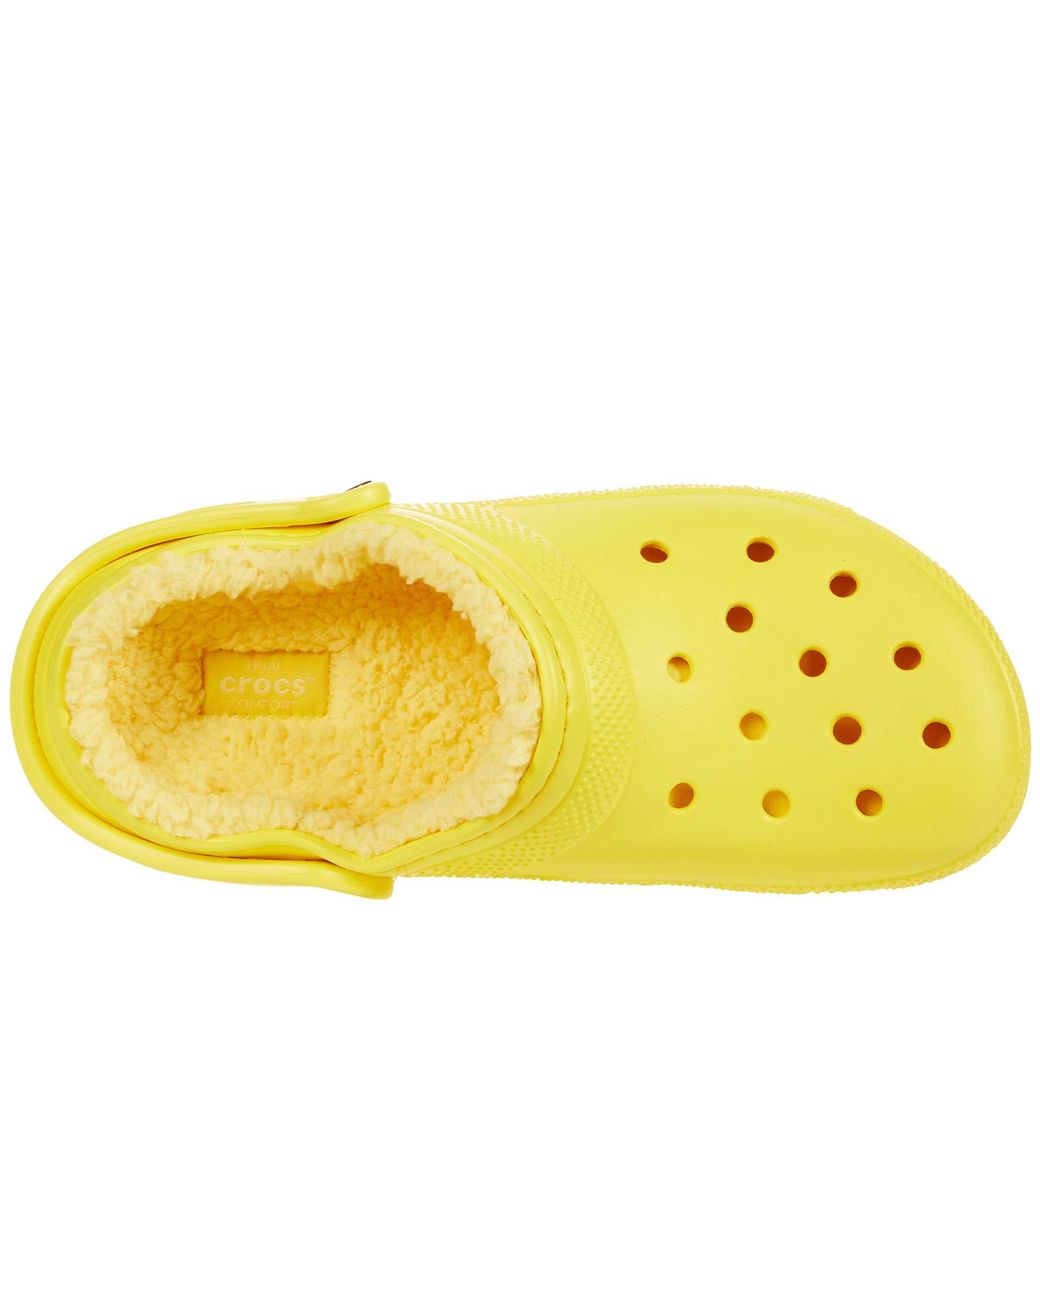 yellow crocs with fur